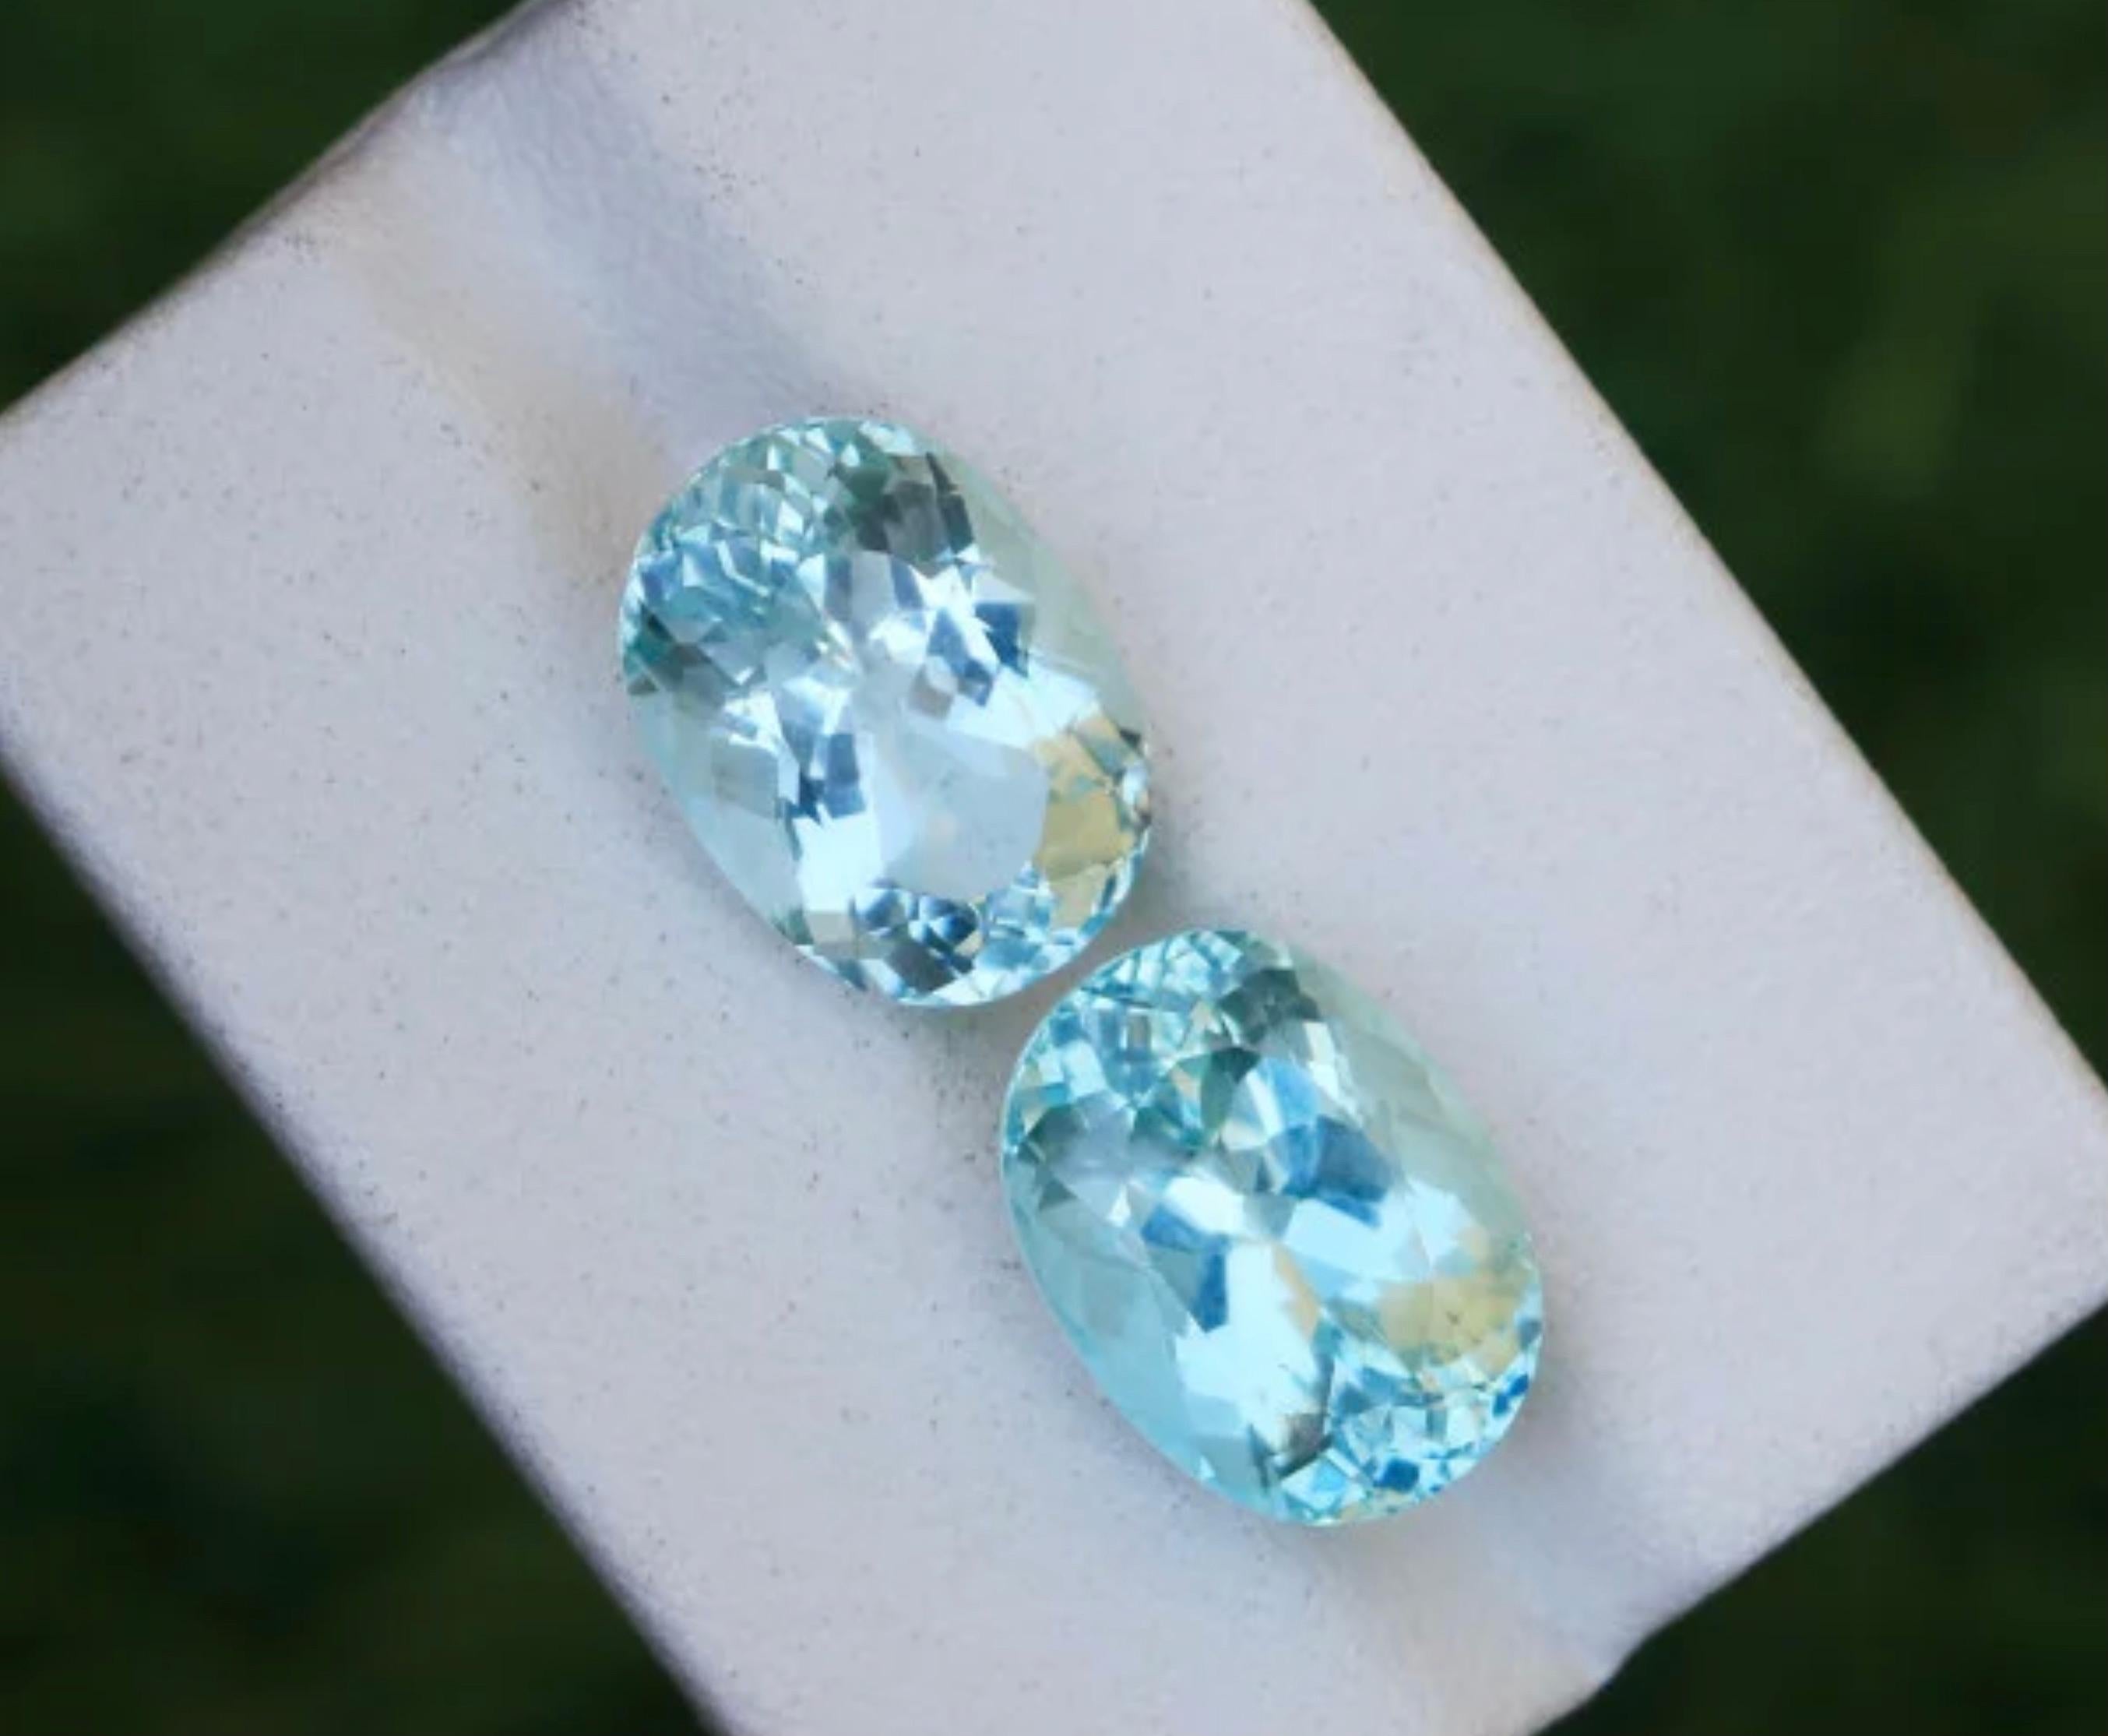 A pair of loose aquamrine gem 
weight : 12.10 ct
 blue  colour
VVS clarity 
cushion cut 
a very clean sparkle natural aquamarine gemstone, perfect for a earring set
